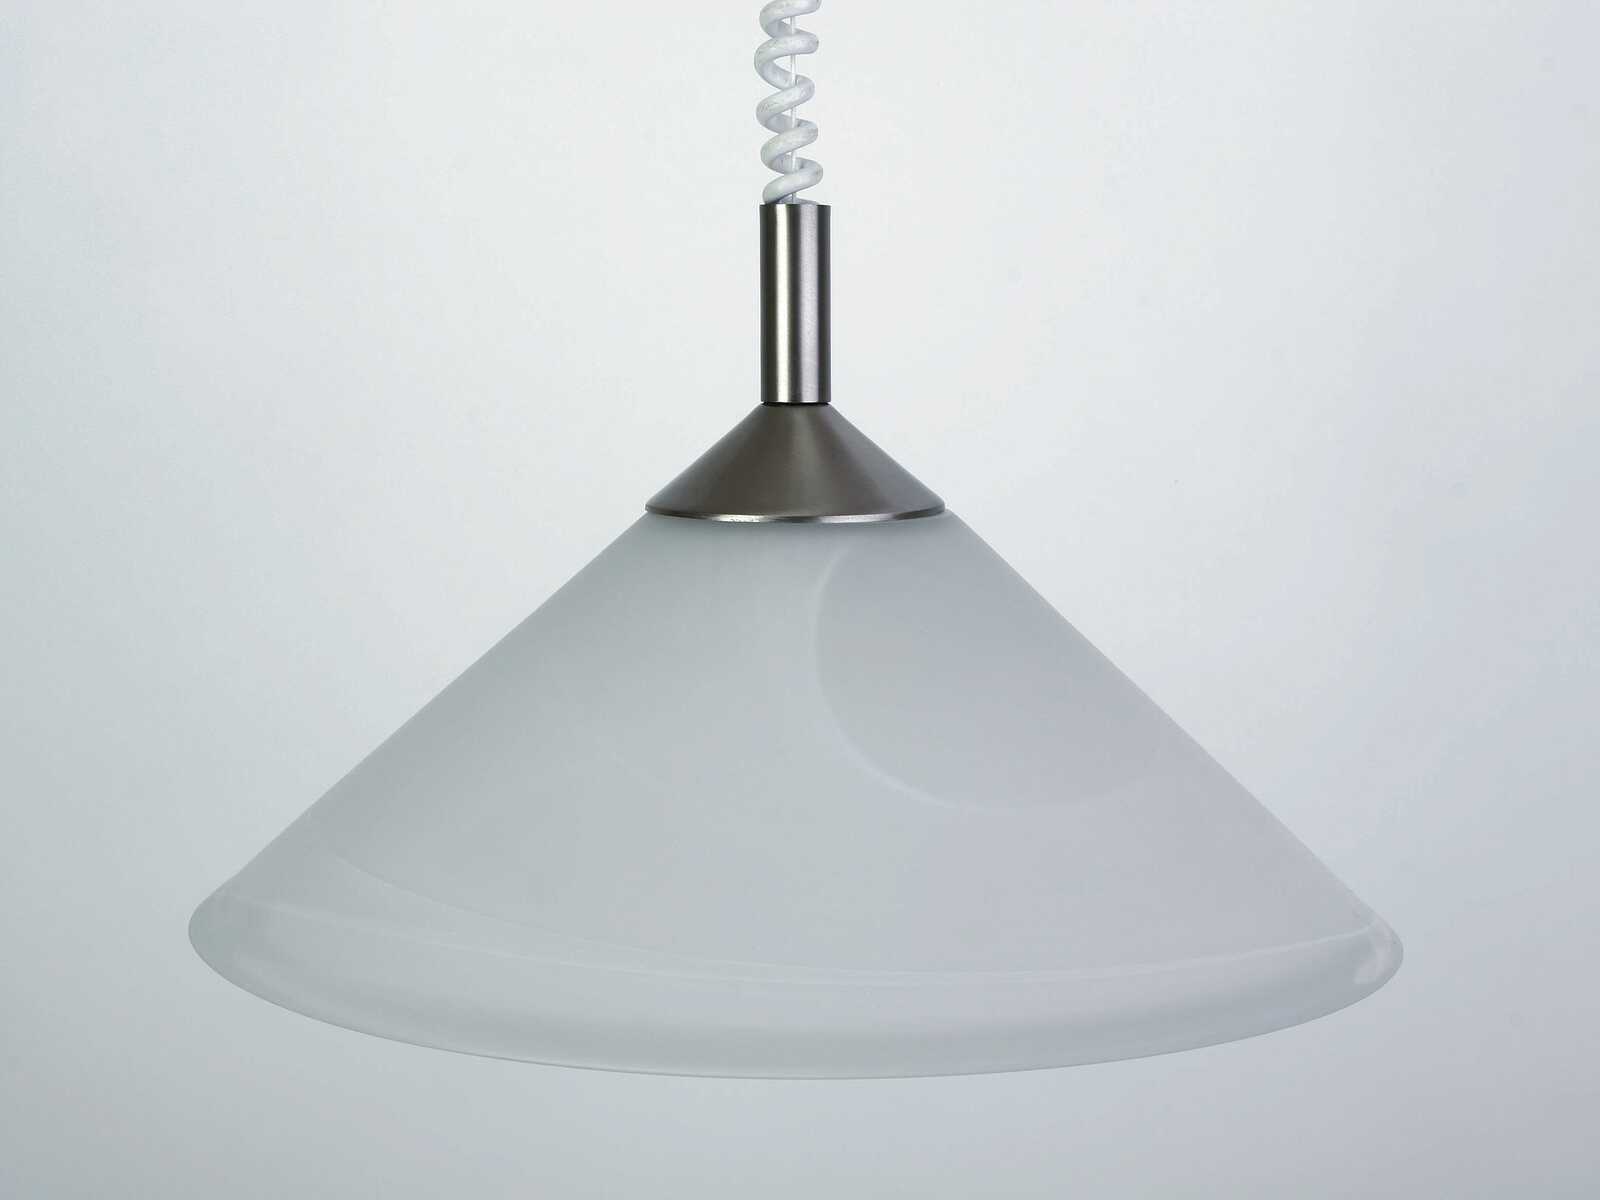             Glass pendant light - Alva - silver, white
        